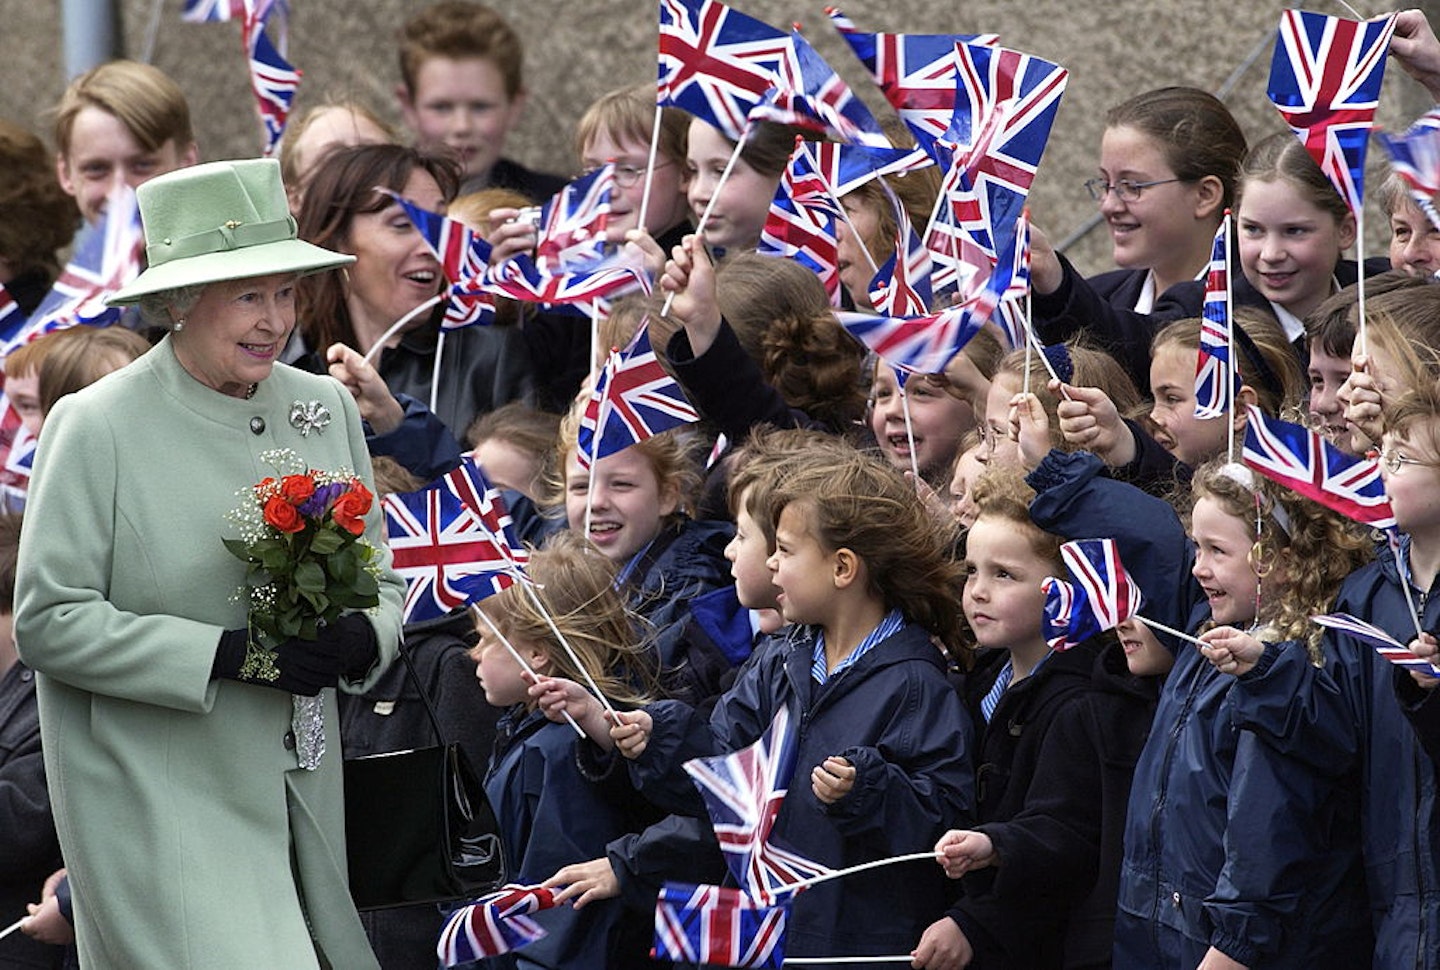 Queen Elizabeth II continuing her tour of the UK in celebration of her golden jubilee